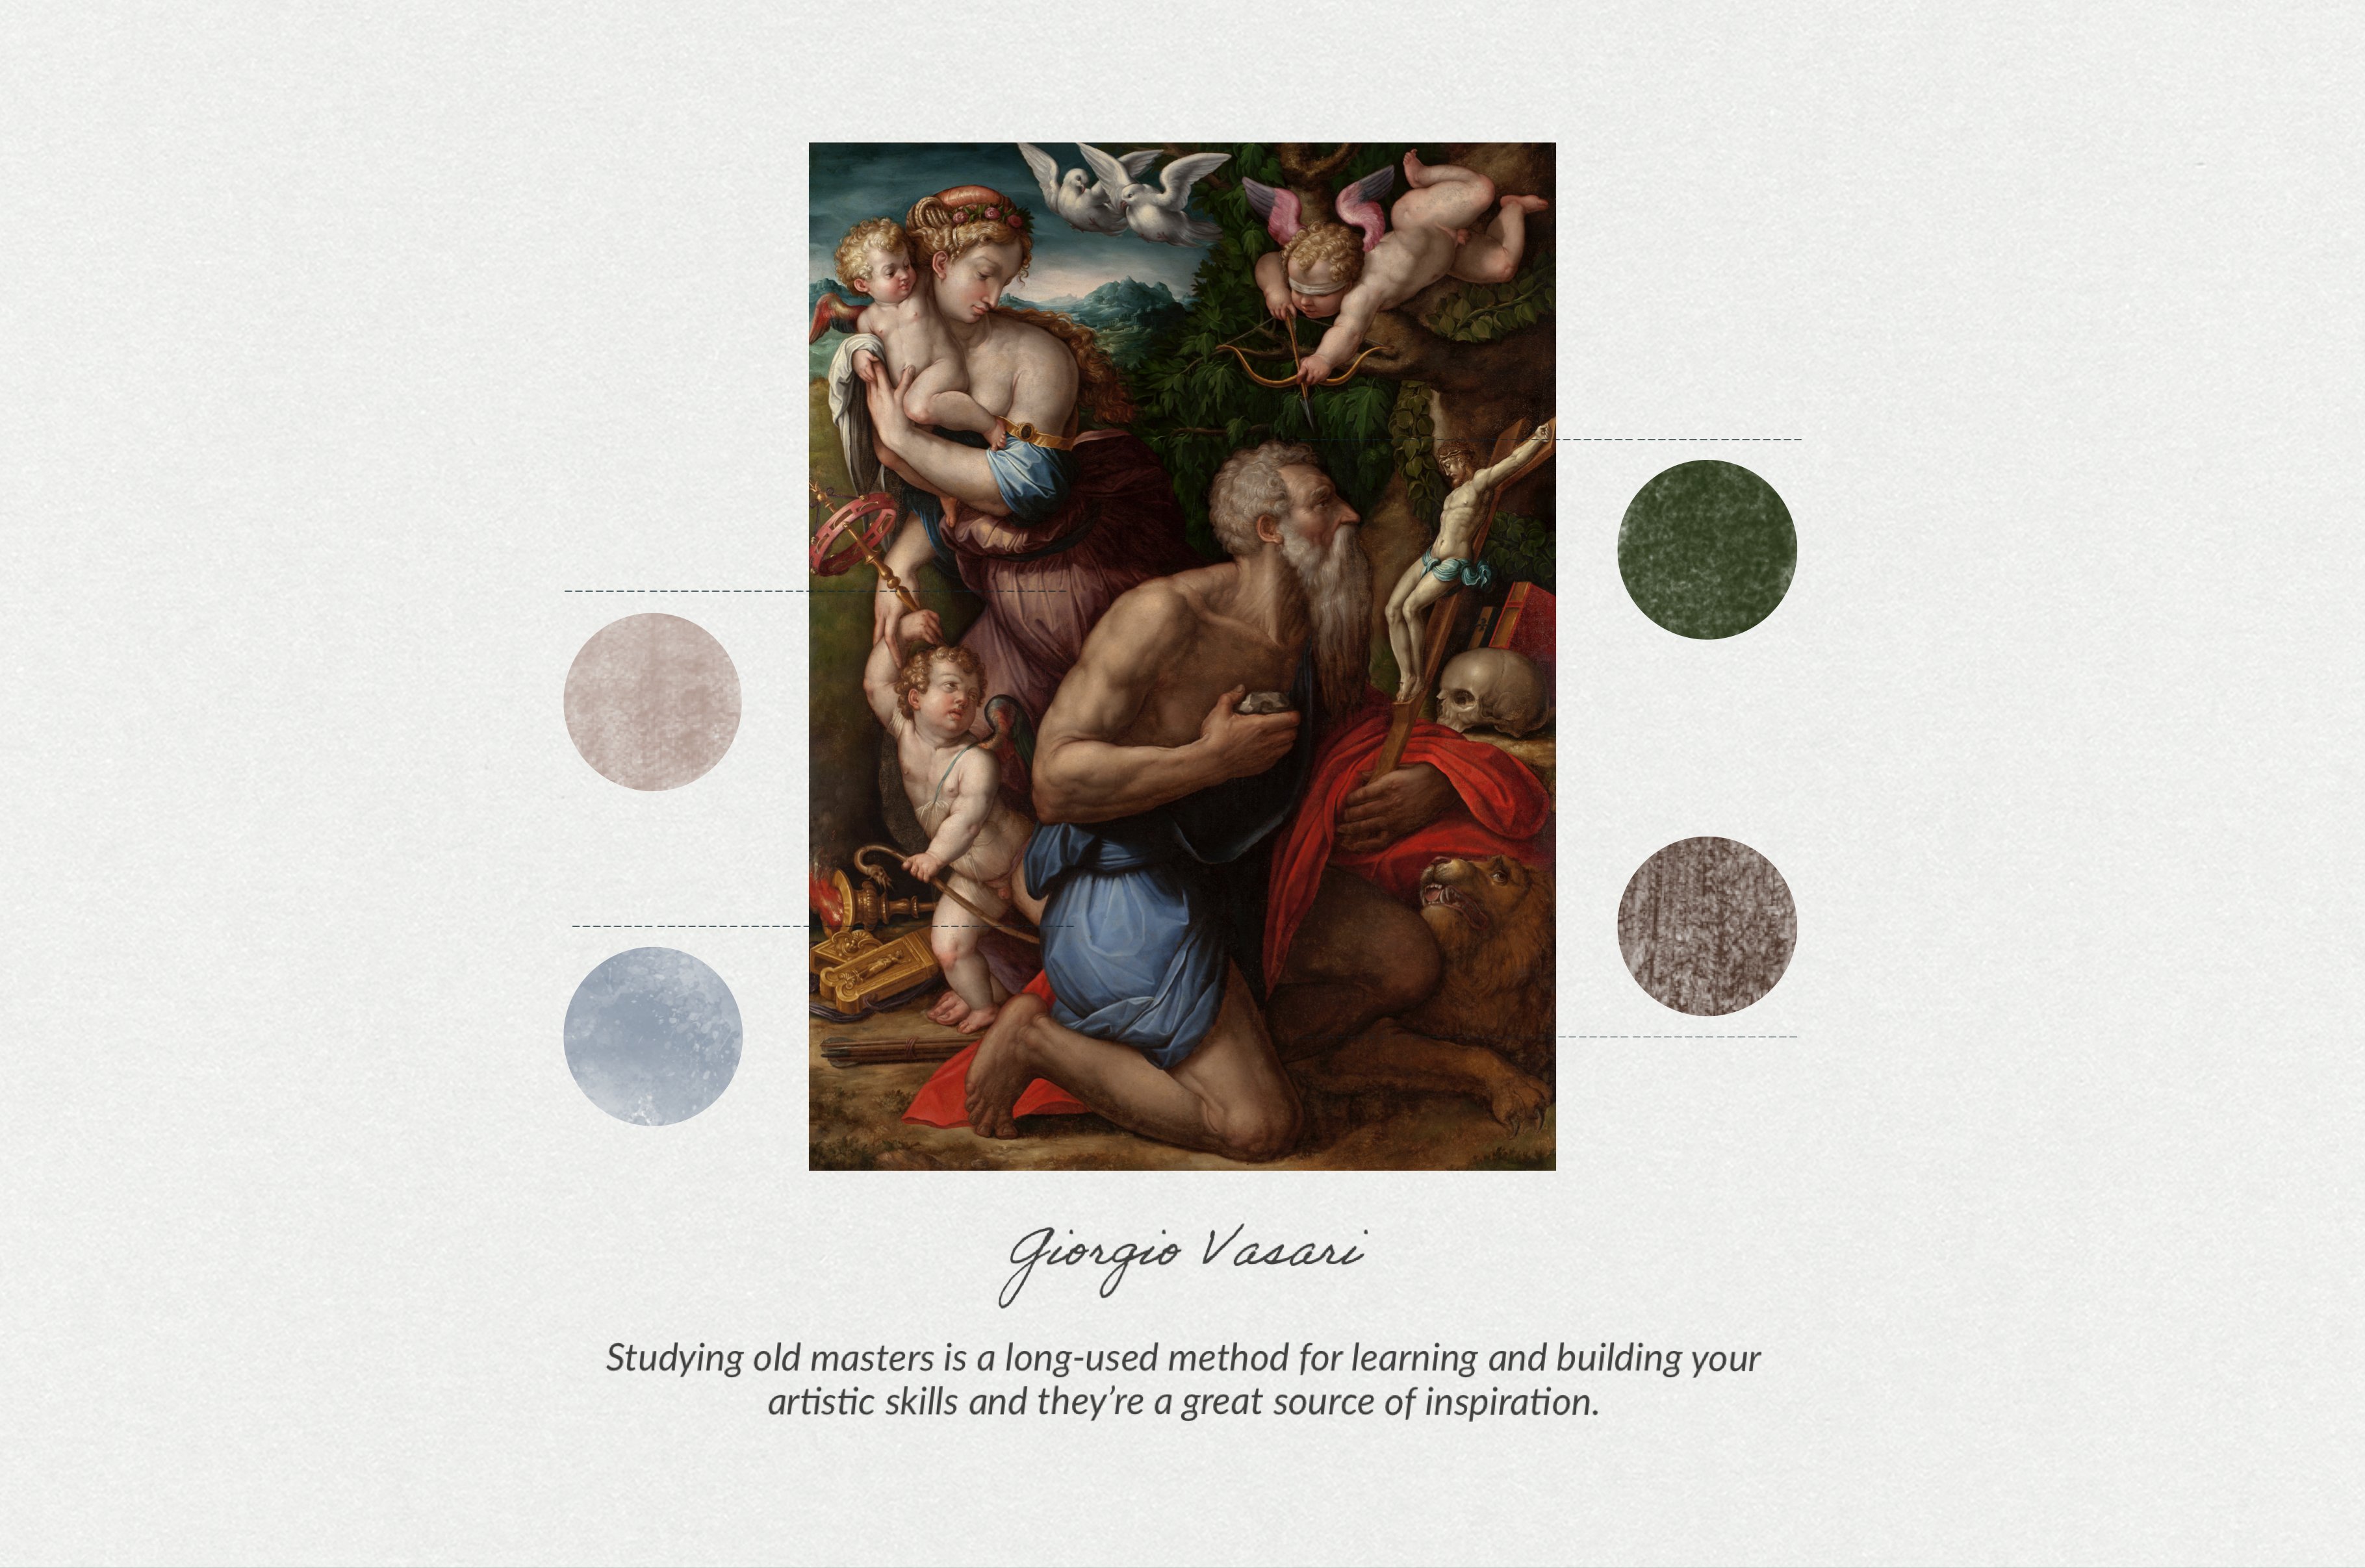 Giorgio Vasari art picture in the special colors palette.